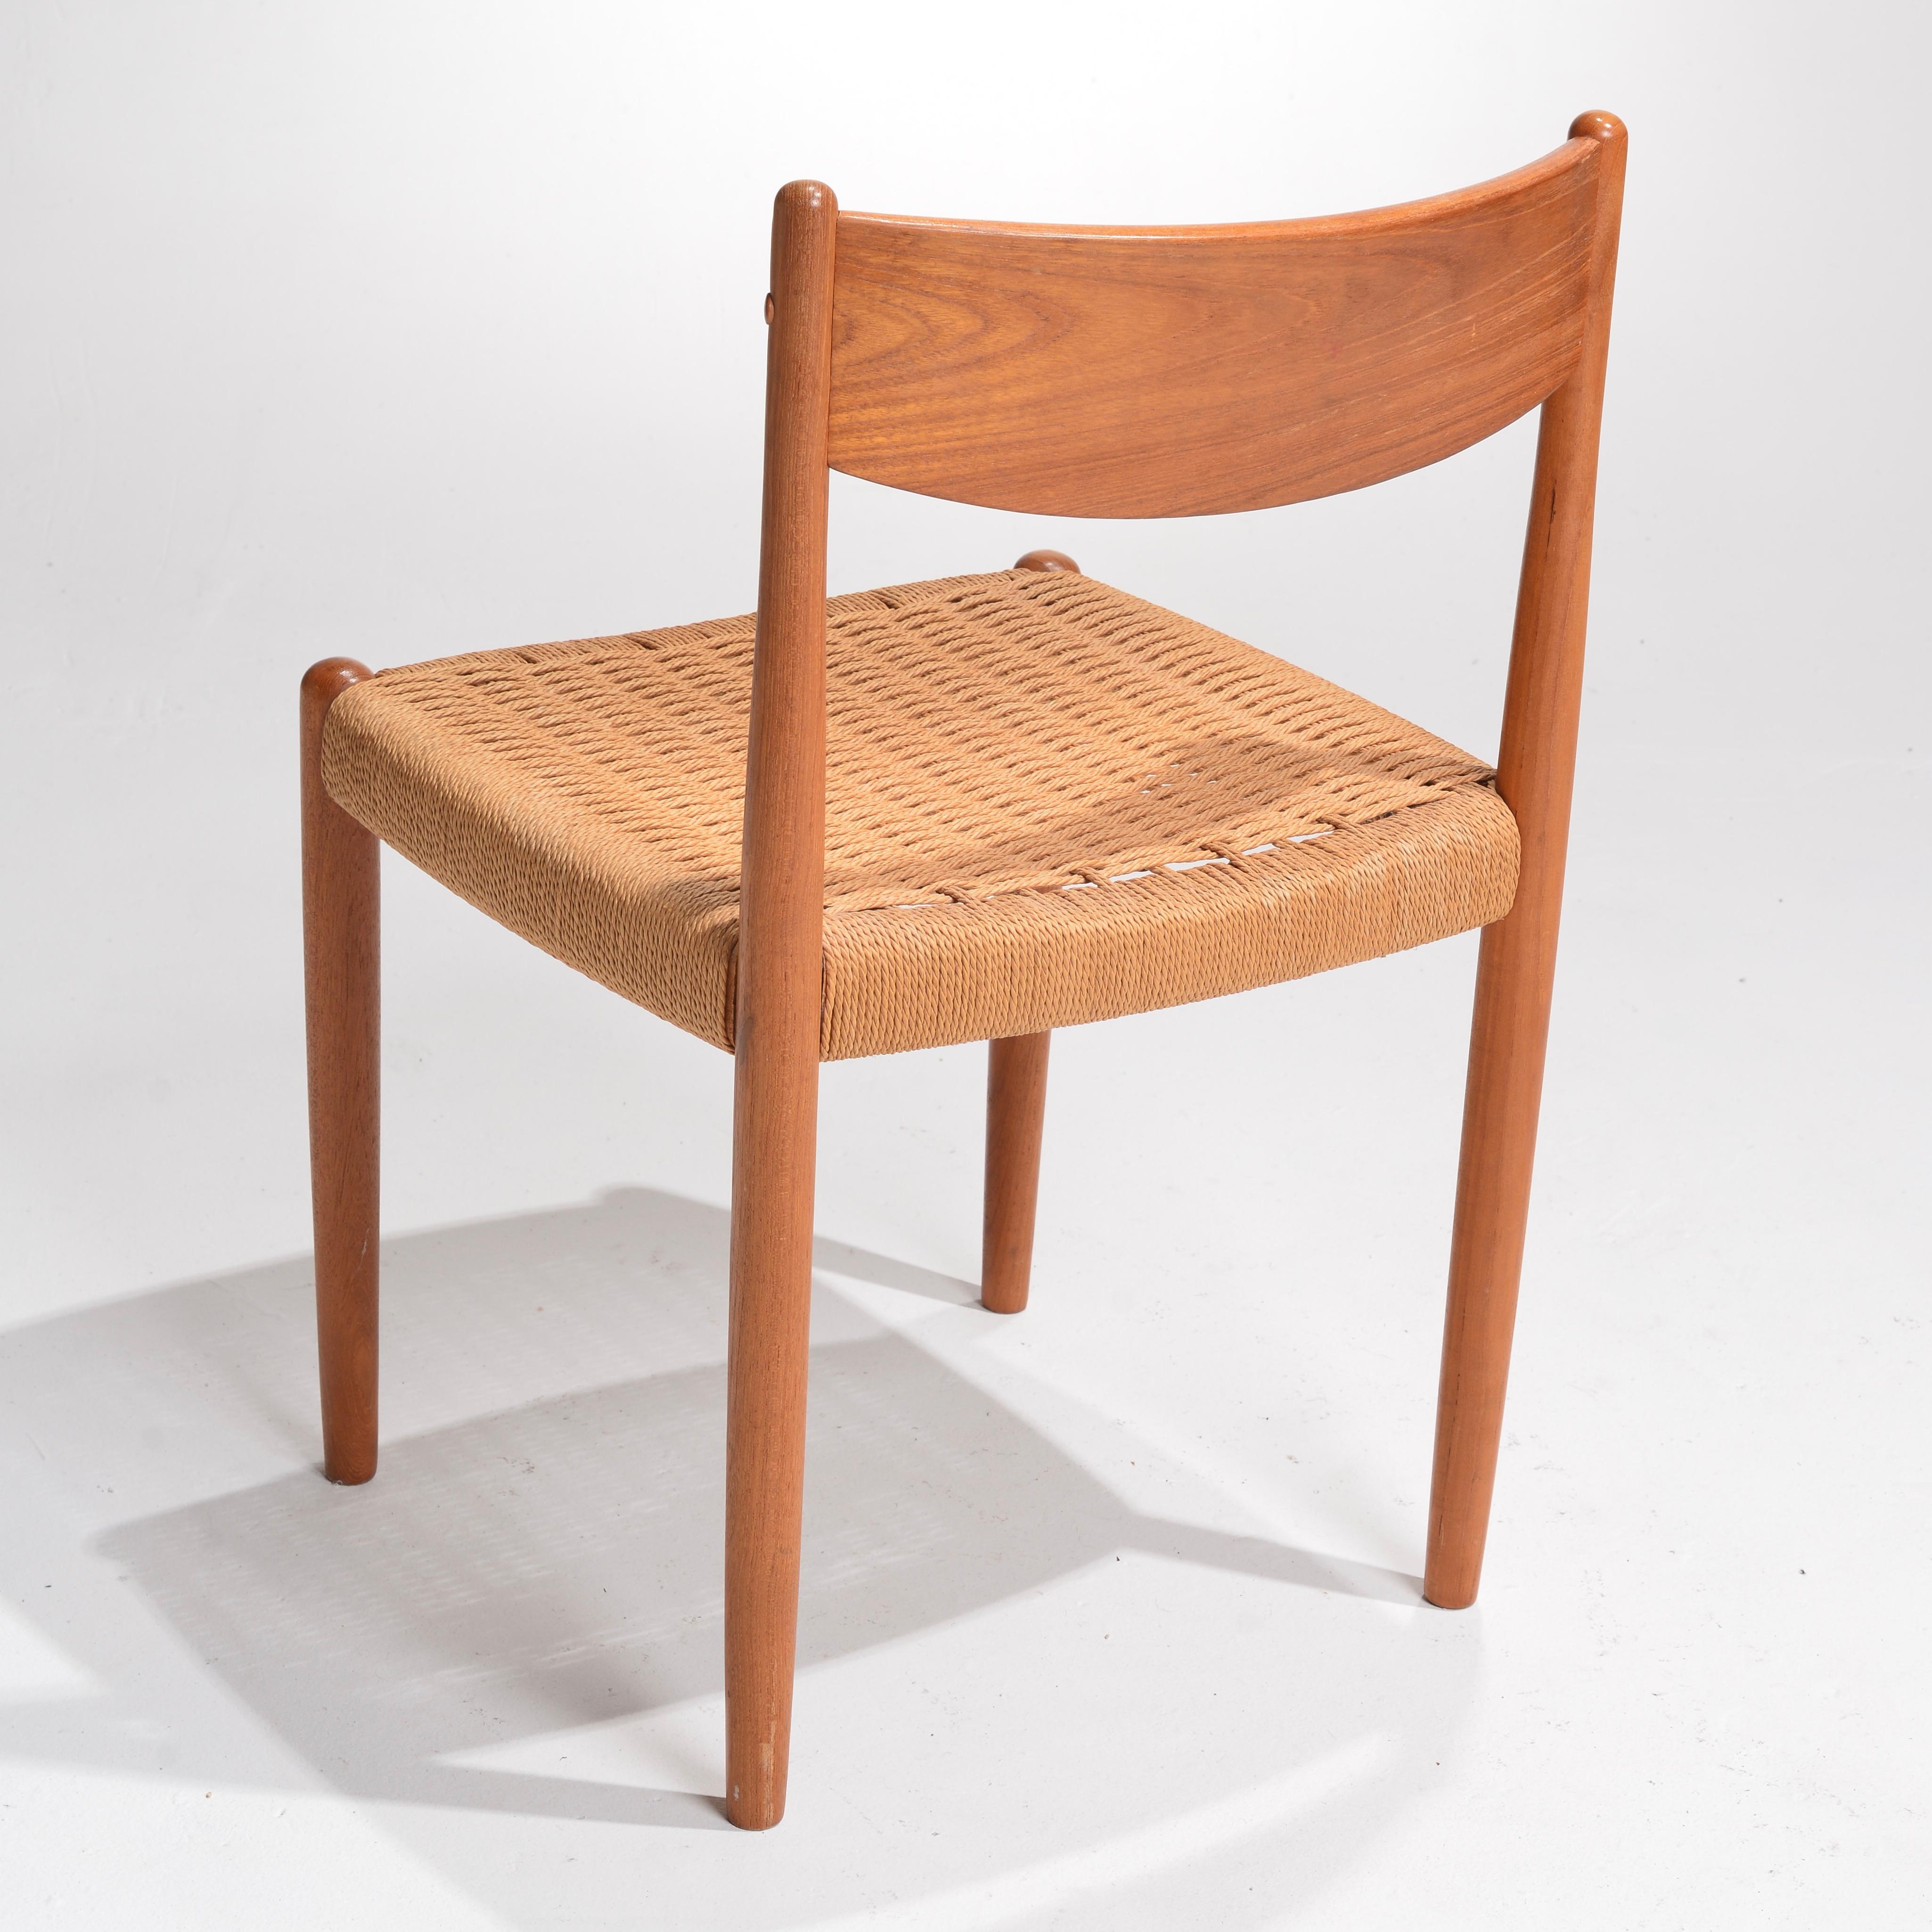 Poul Volther for Frem Rojle Danish Teak Woven Chair Midcentury 1960s For Sale 1